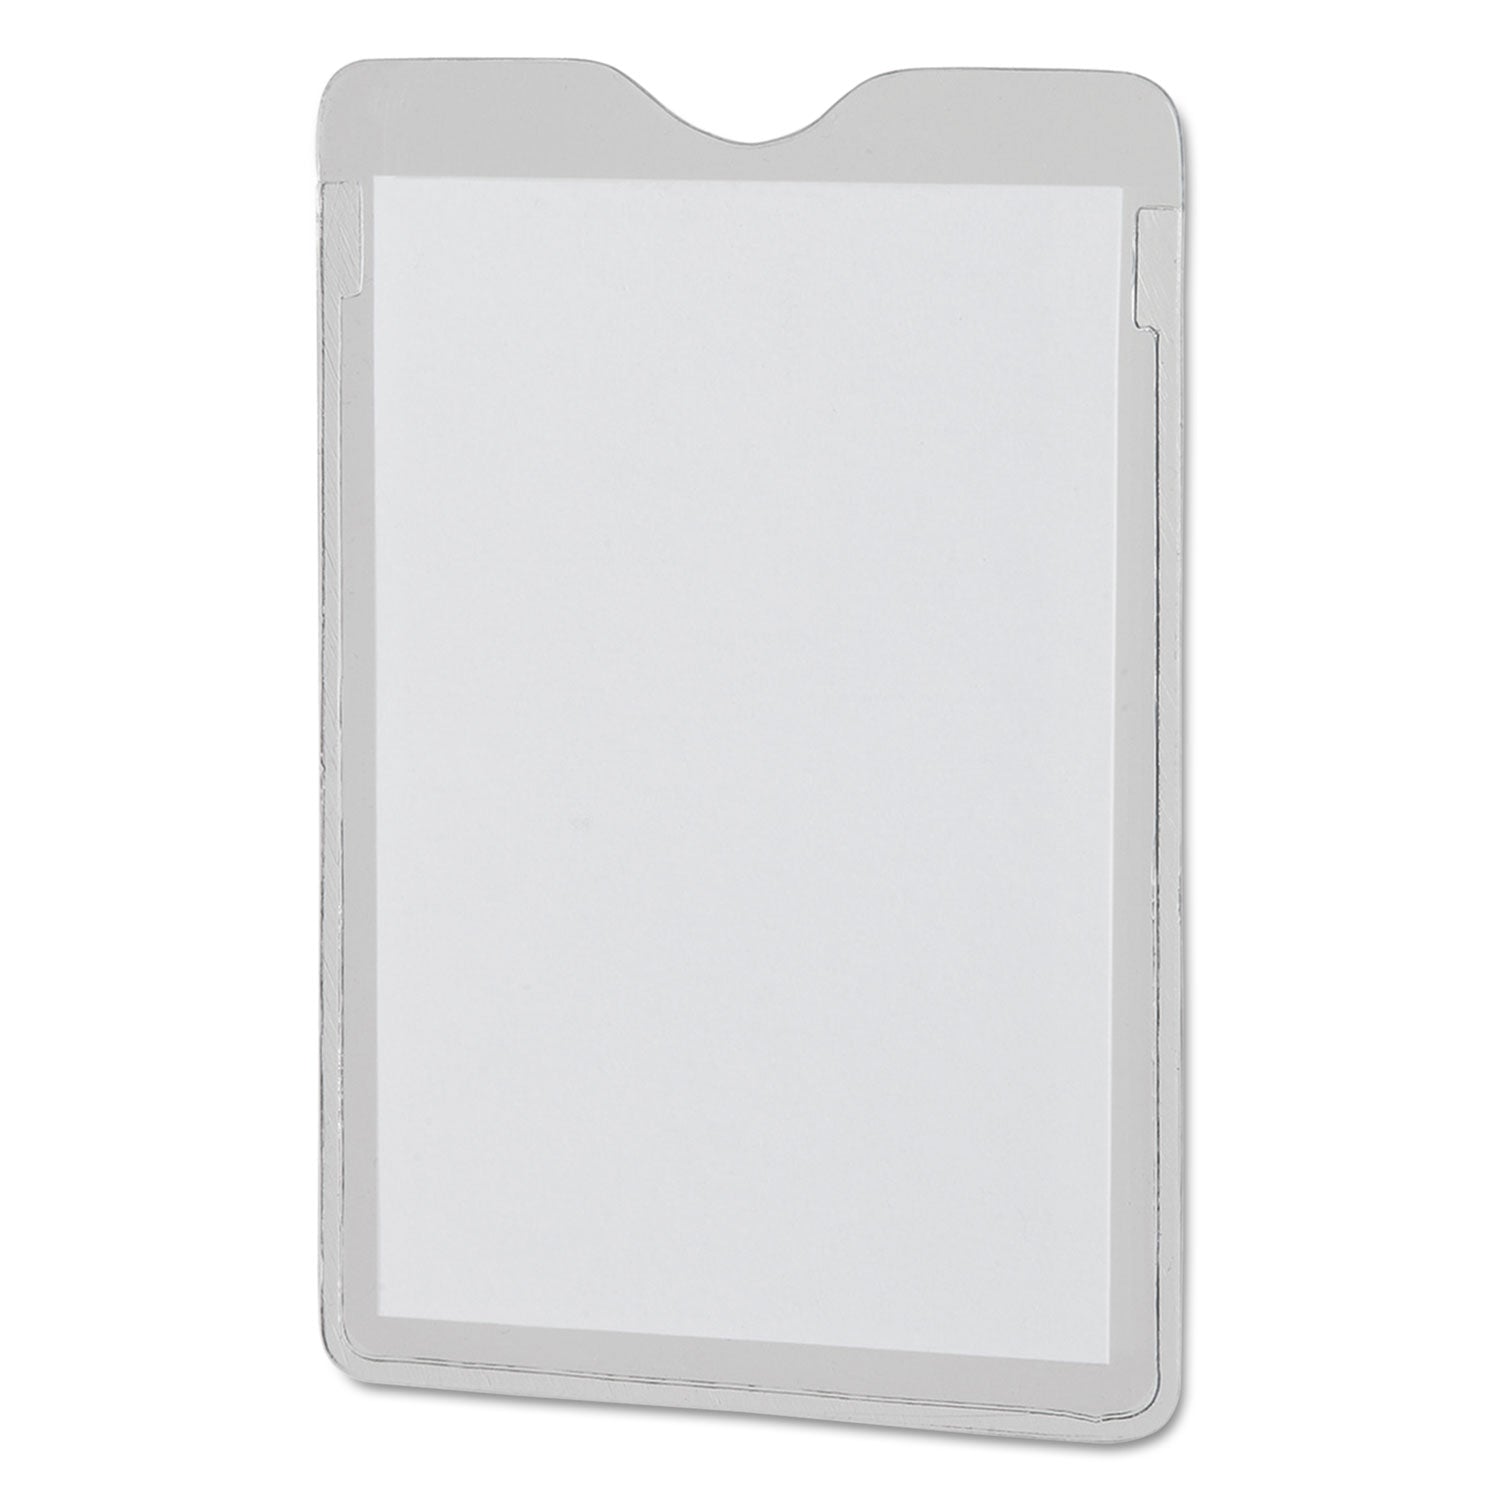 Utili-Jac Heavy-Duty Clear Plastic Envelopes, 2.25 x 3.5, 50/Box - 